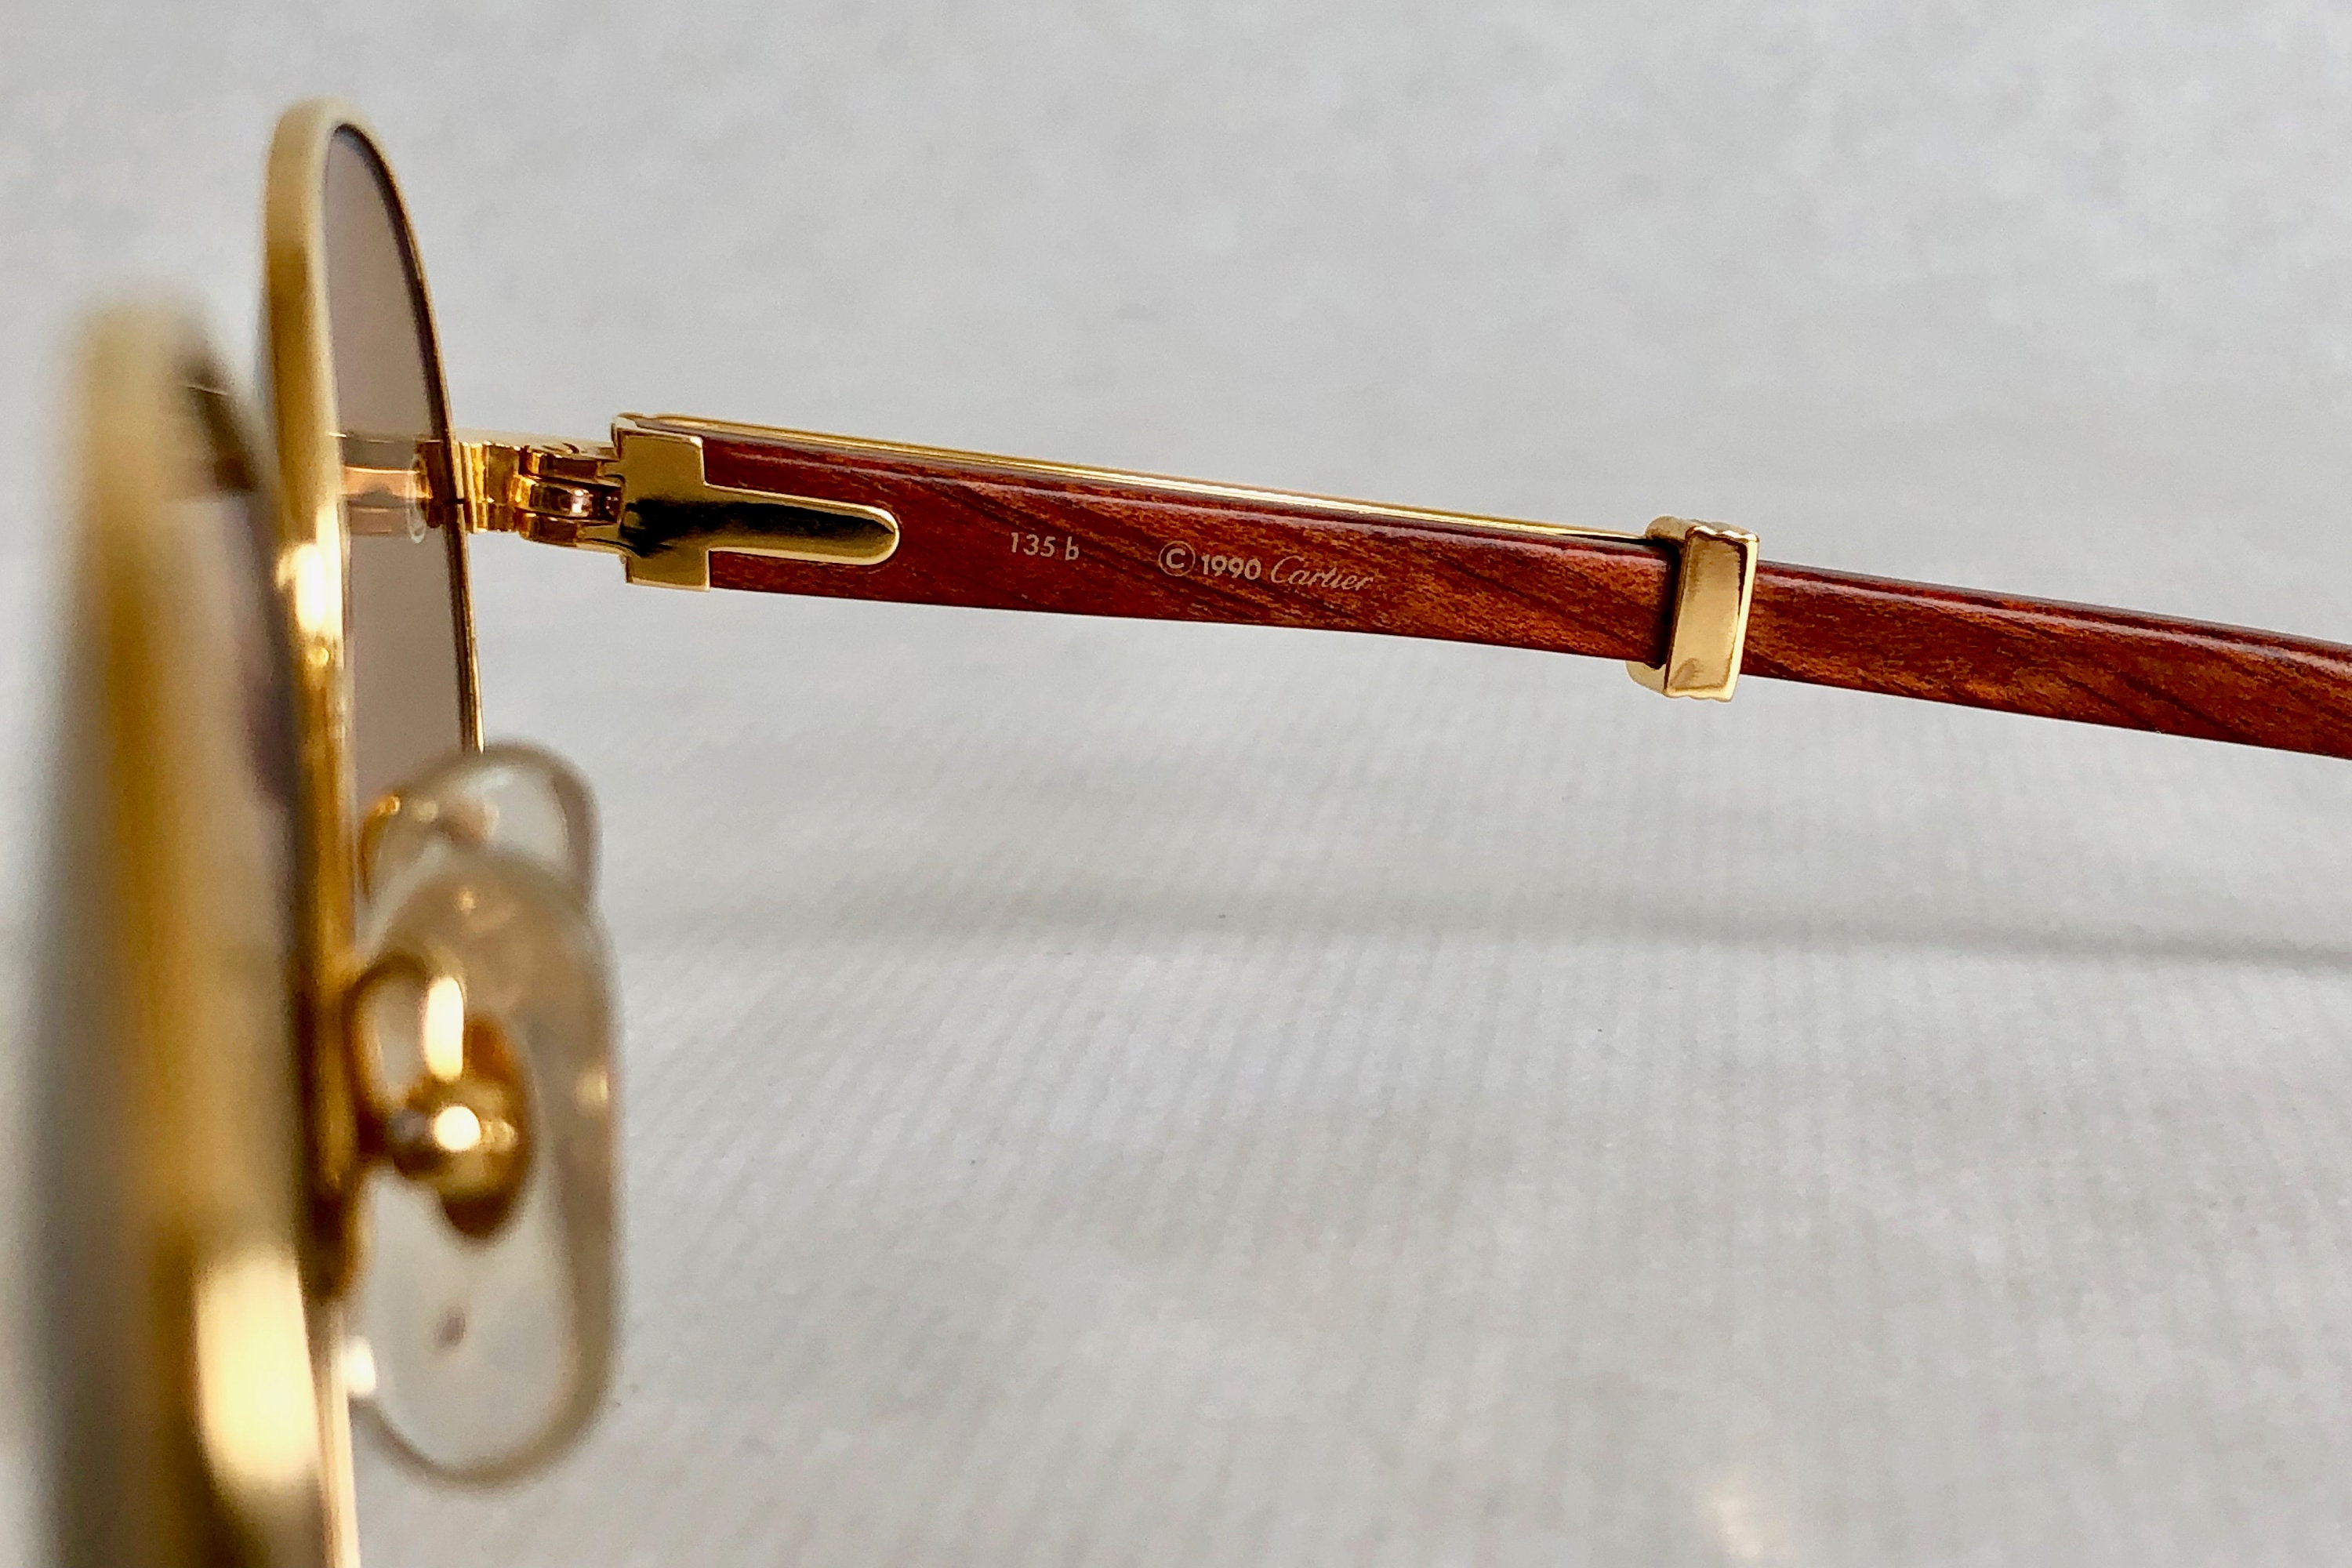 gucci mane cartier glasses